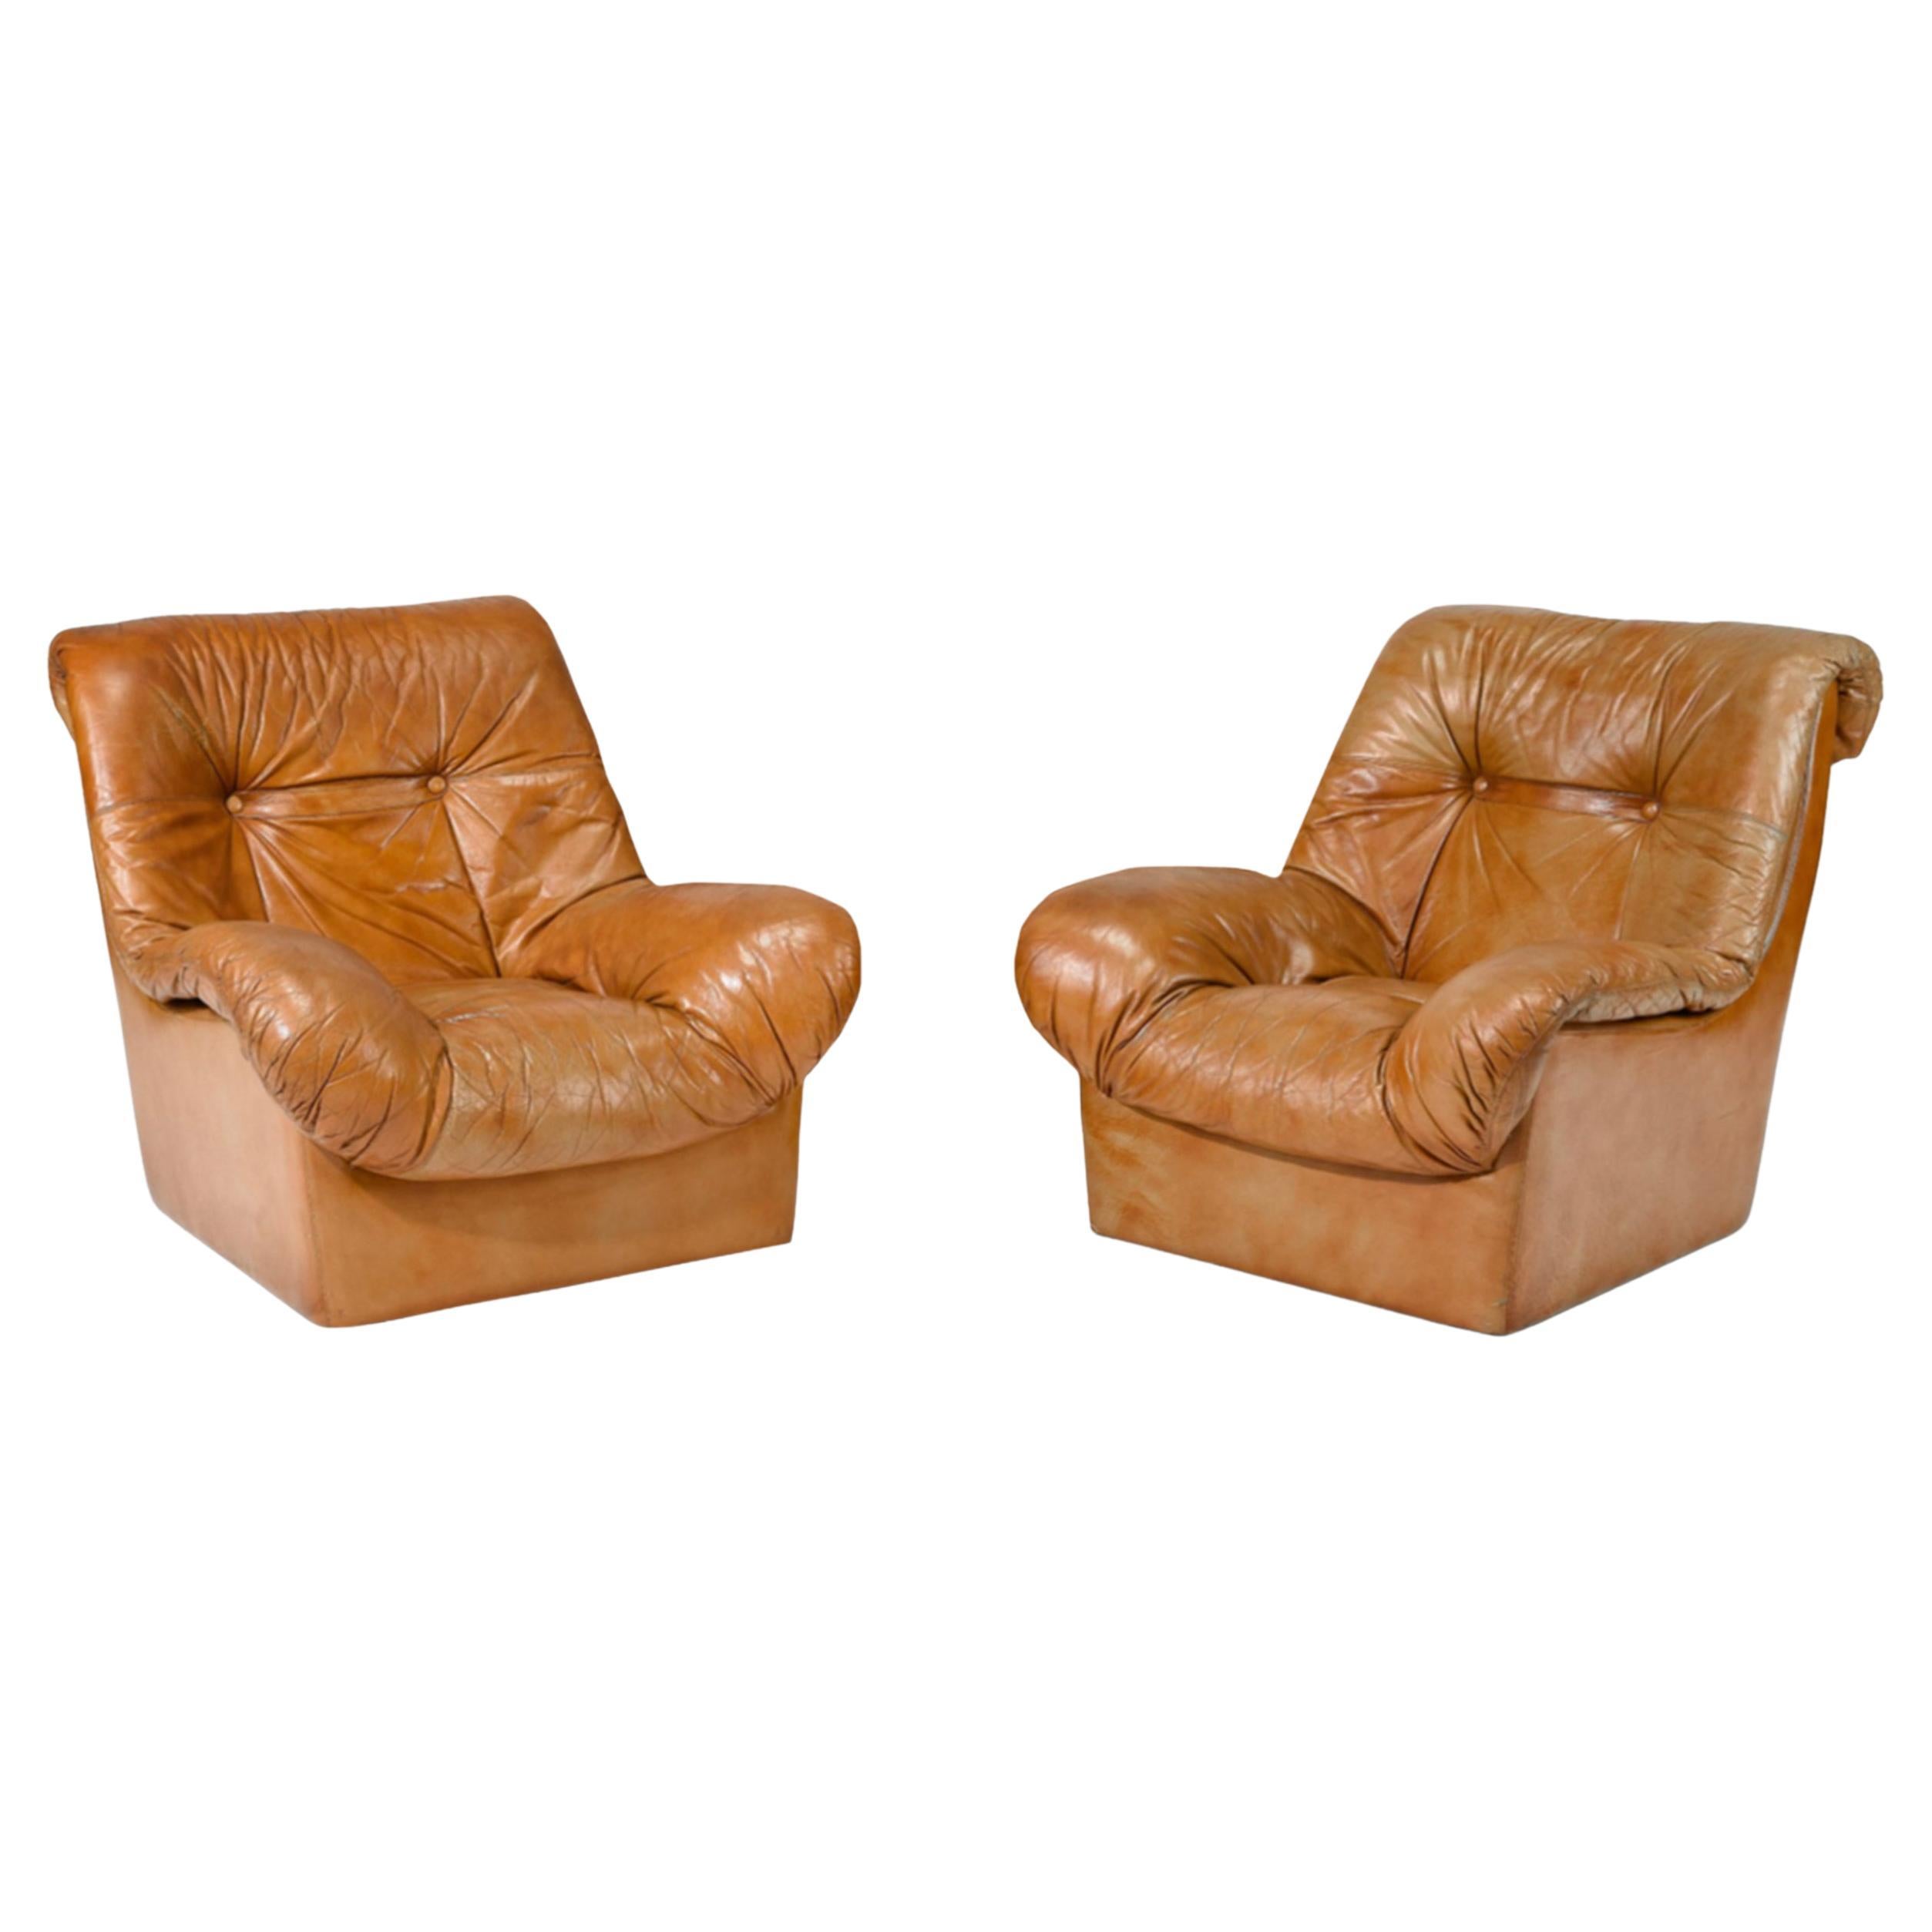 Pair Mid Century Scandinavian Danish modern Tan Leather Puffy Lounge Chairs For Sale